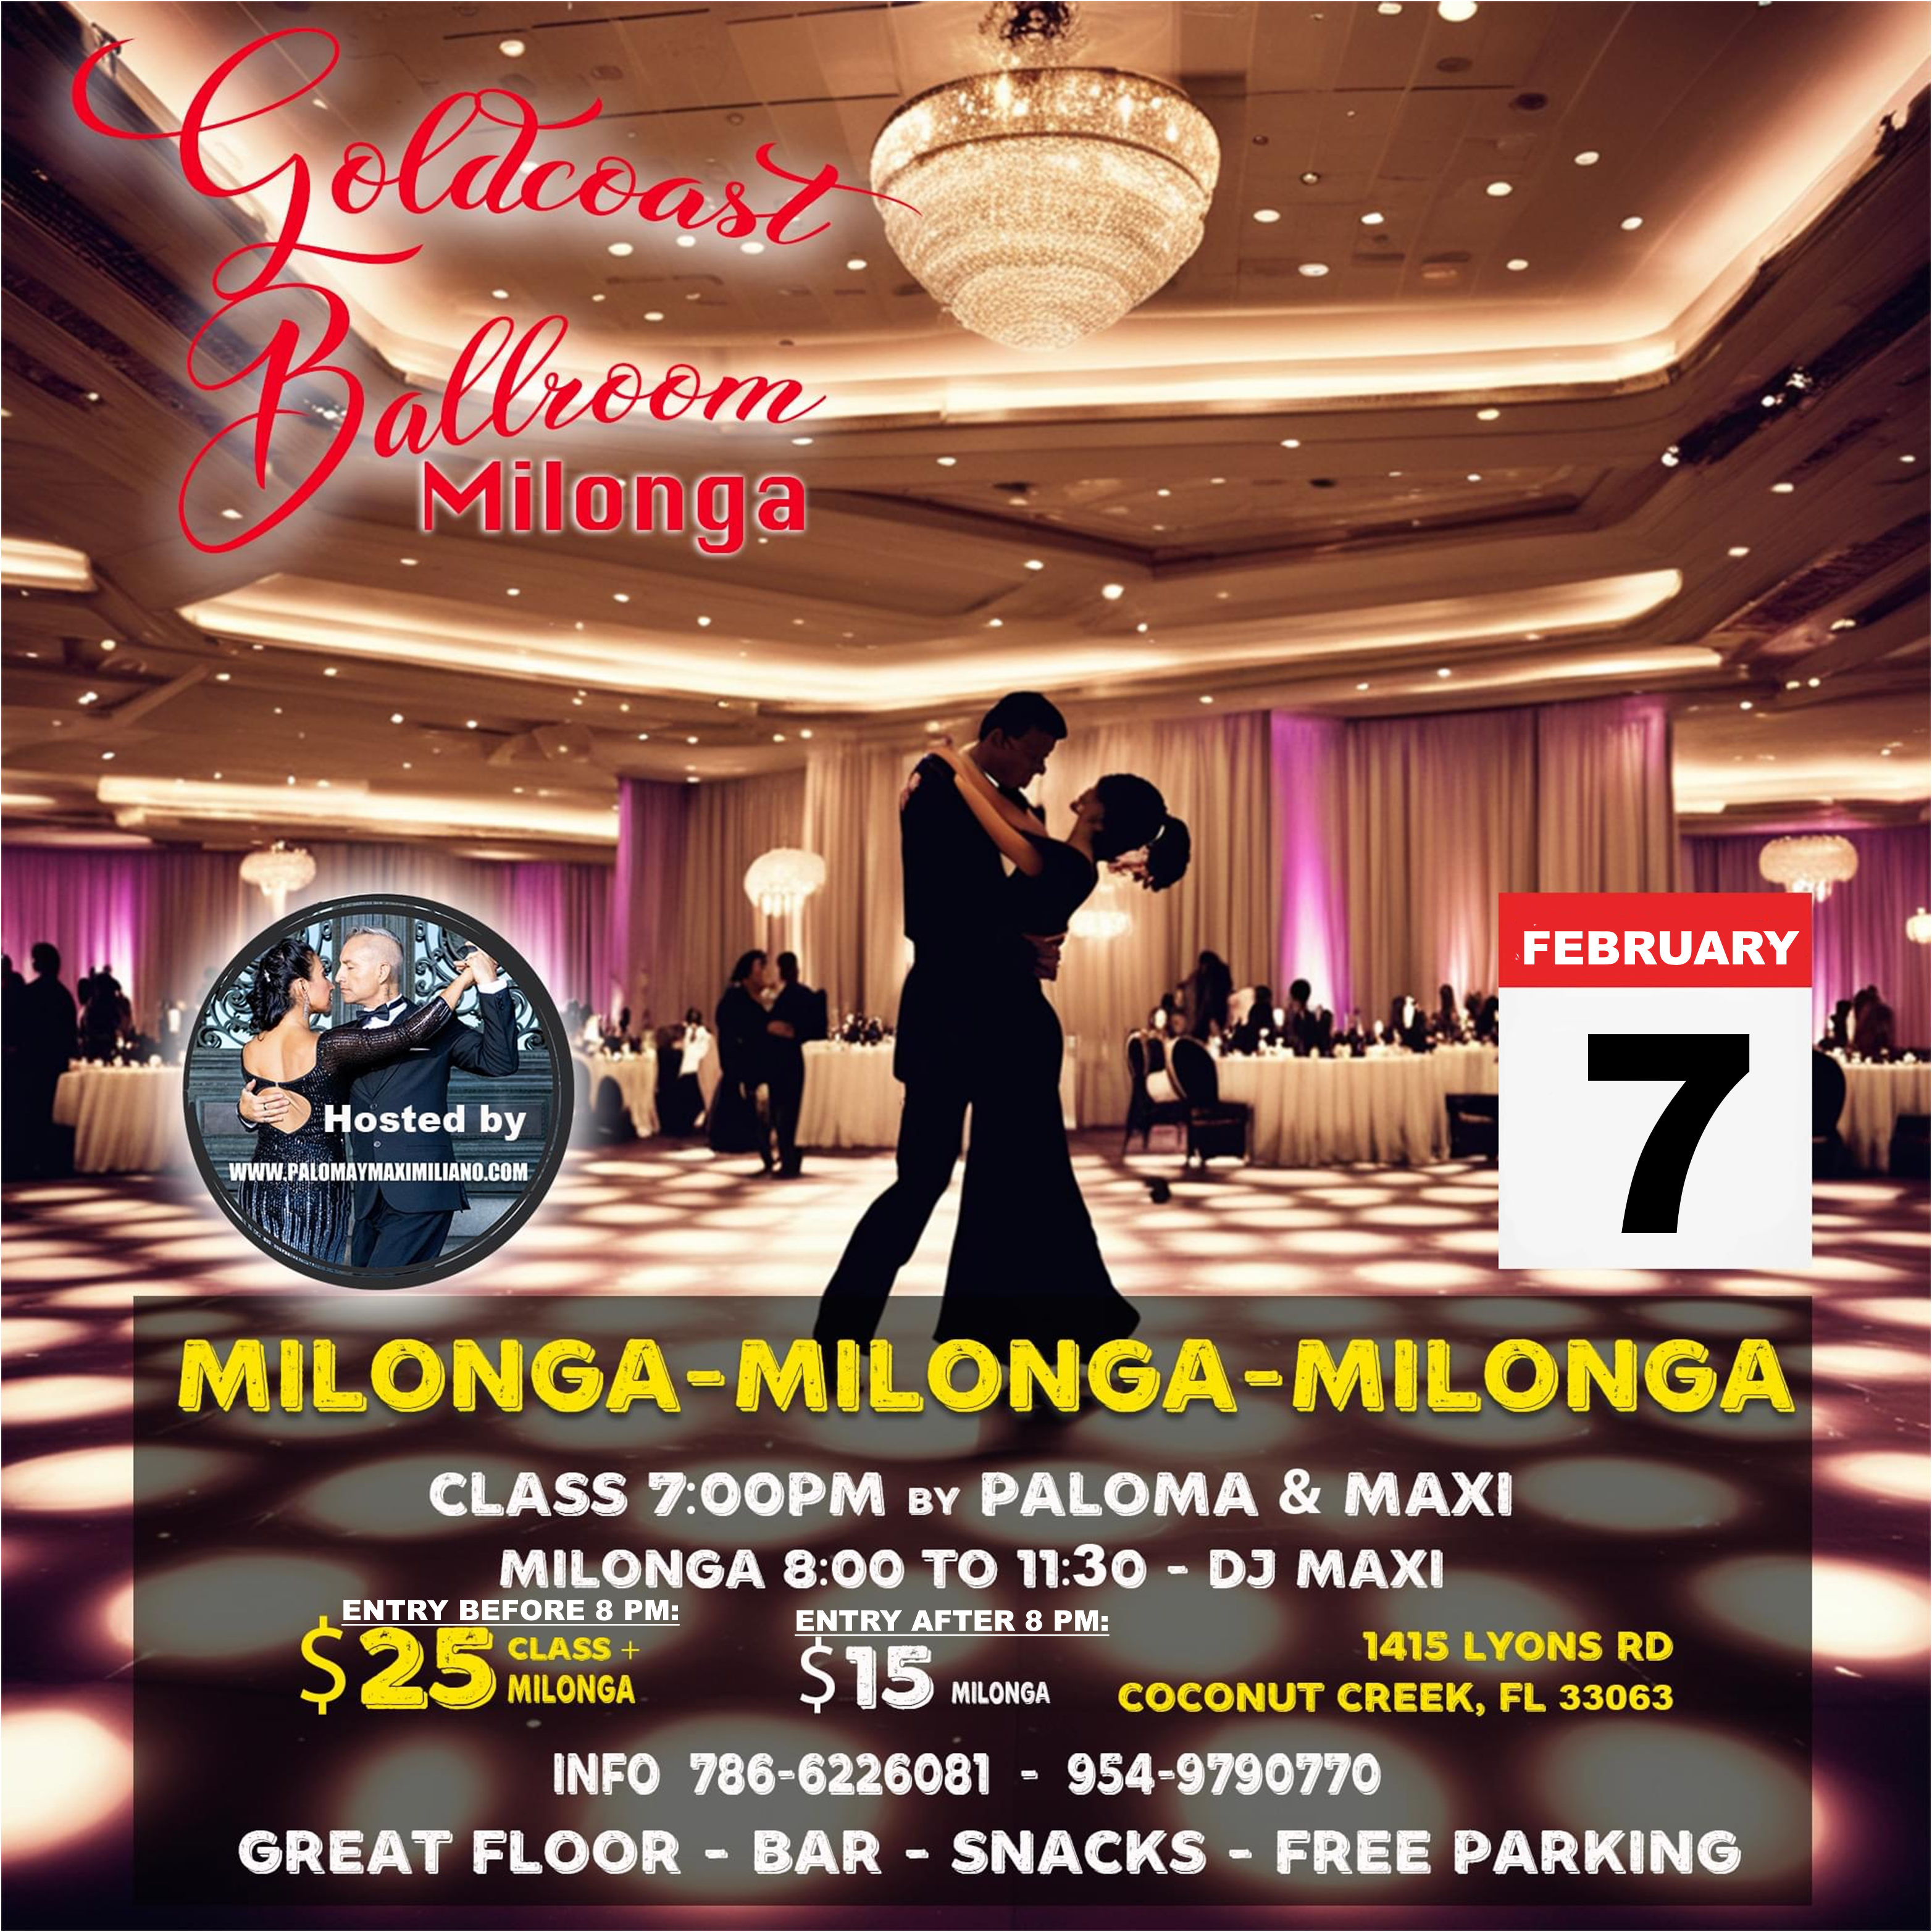 Wednesday, February 7 - Milonga & Class